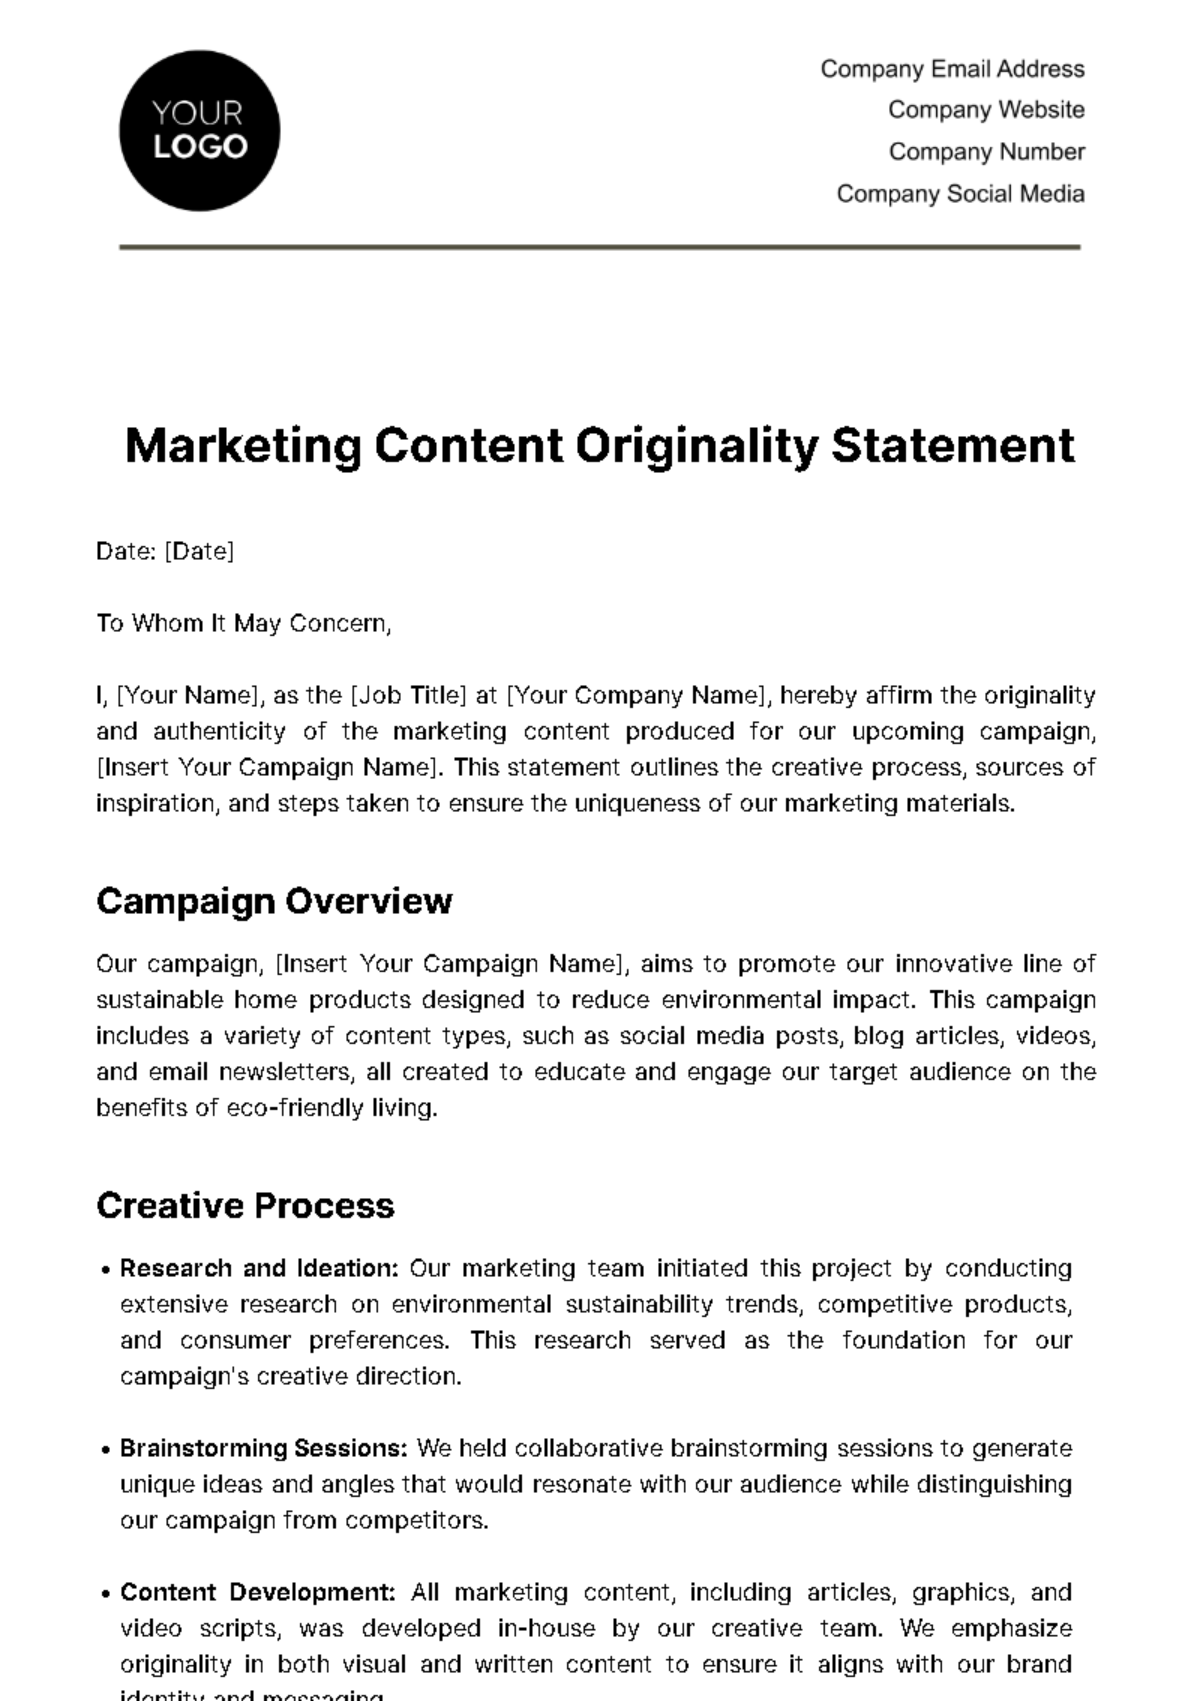 Free Marketing Content Originality Statement Template